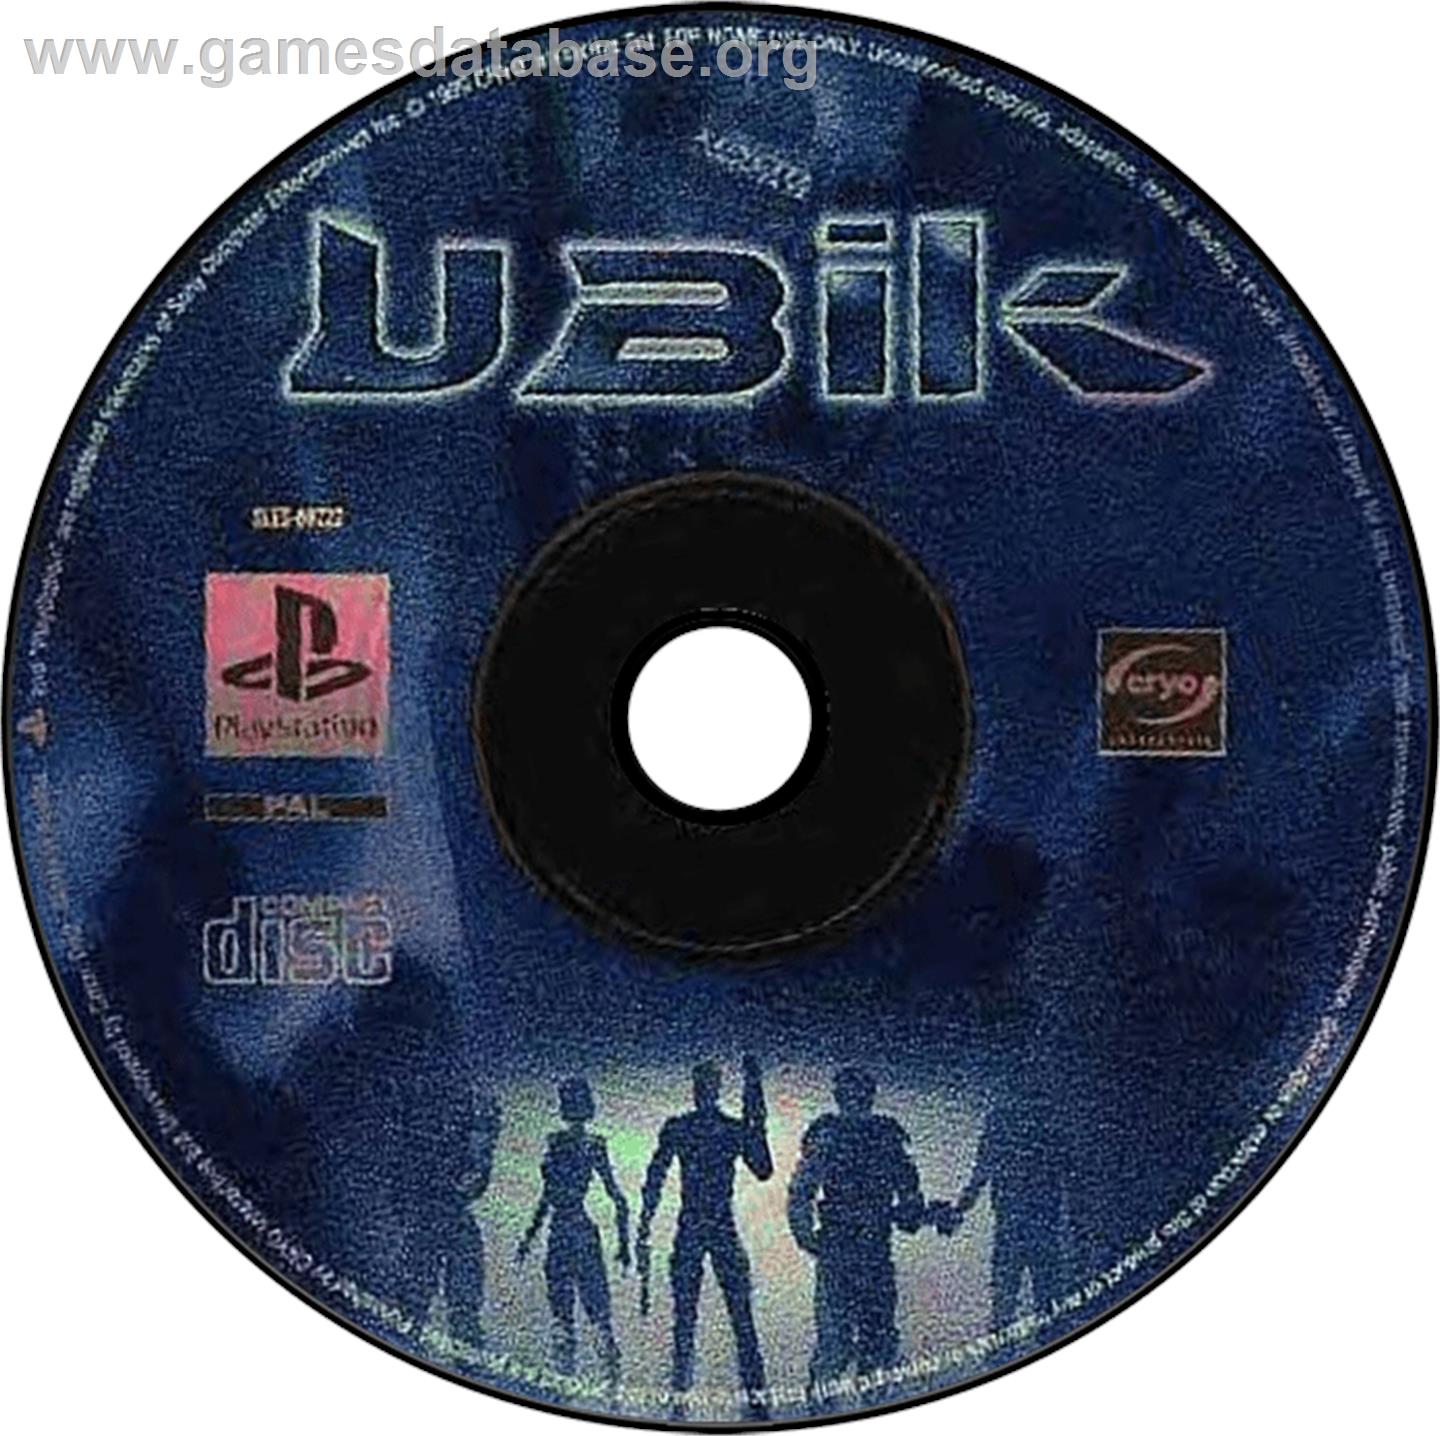 UBIK - Sony Playstation - Artwork - Disc